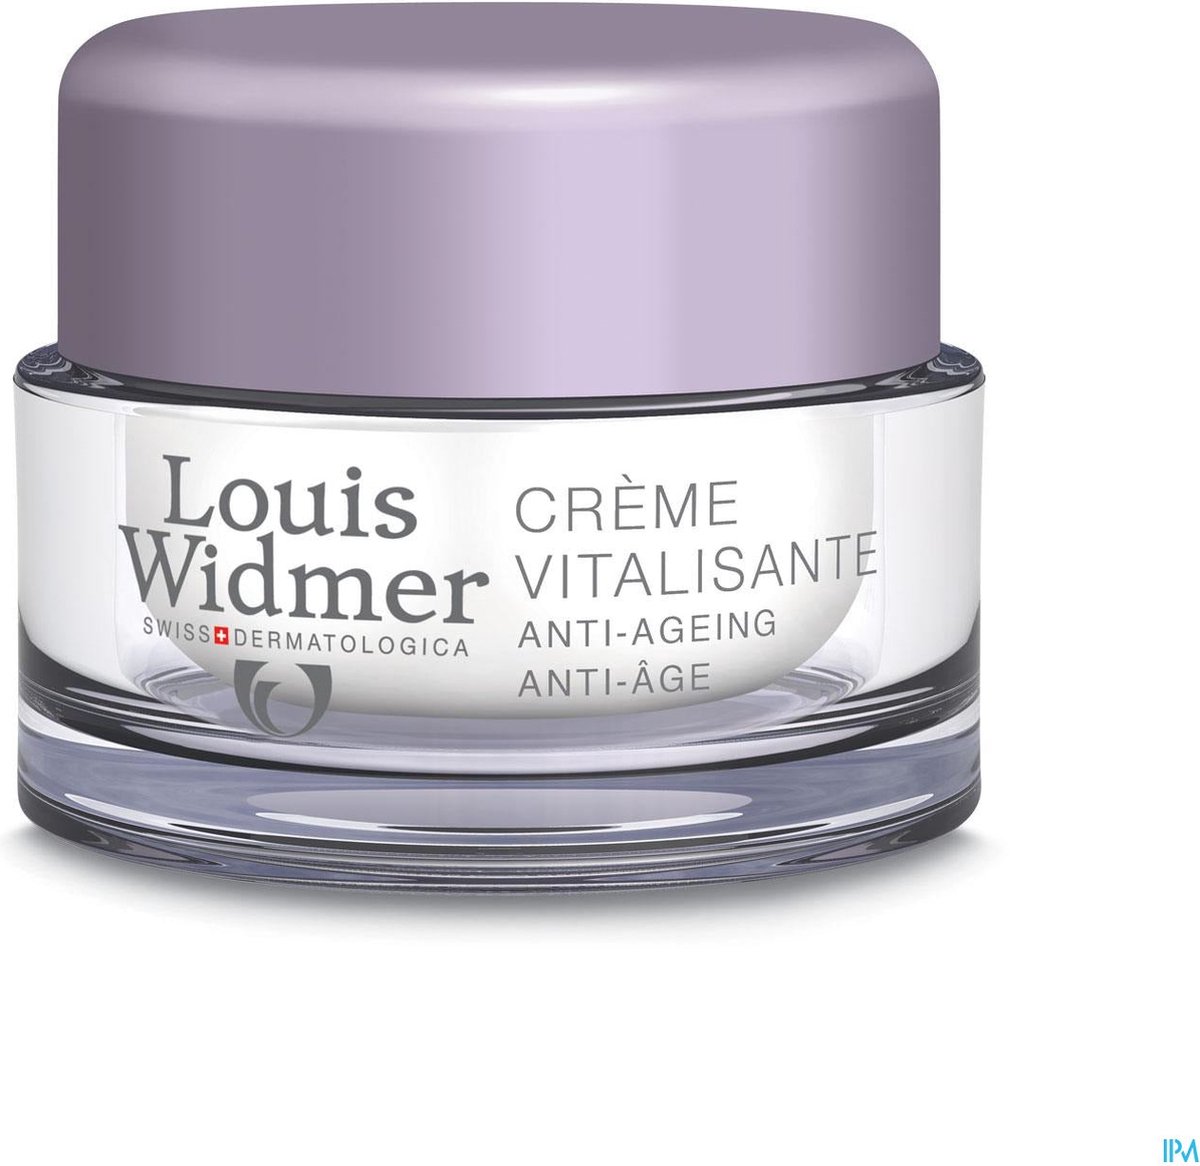 Widmer Vitalisante Creme Parf 50ml